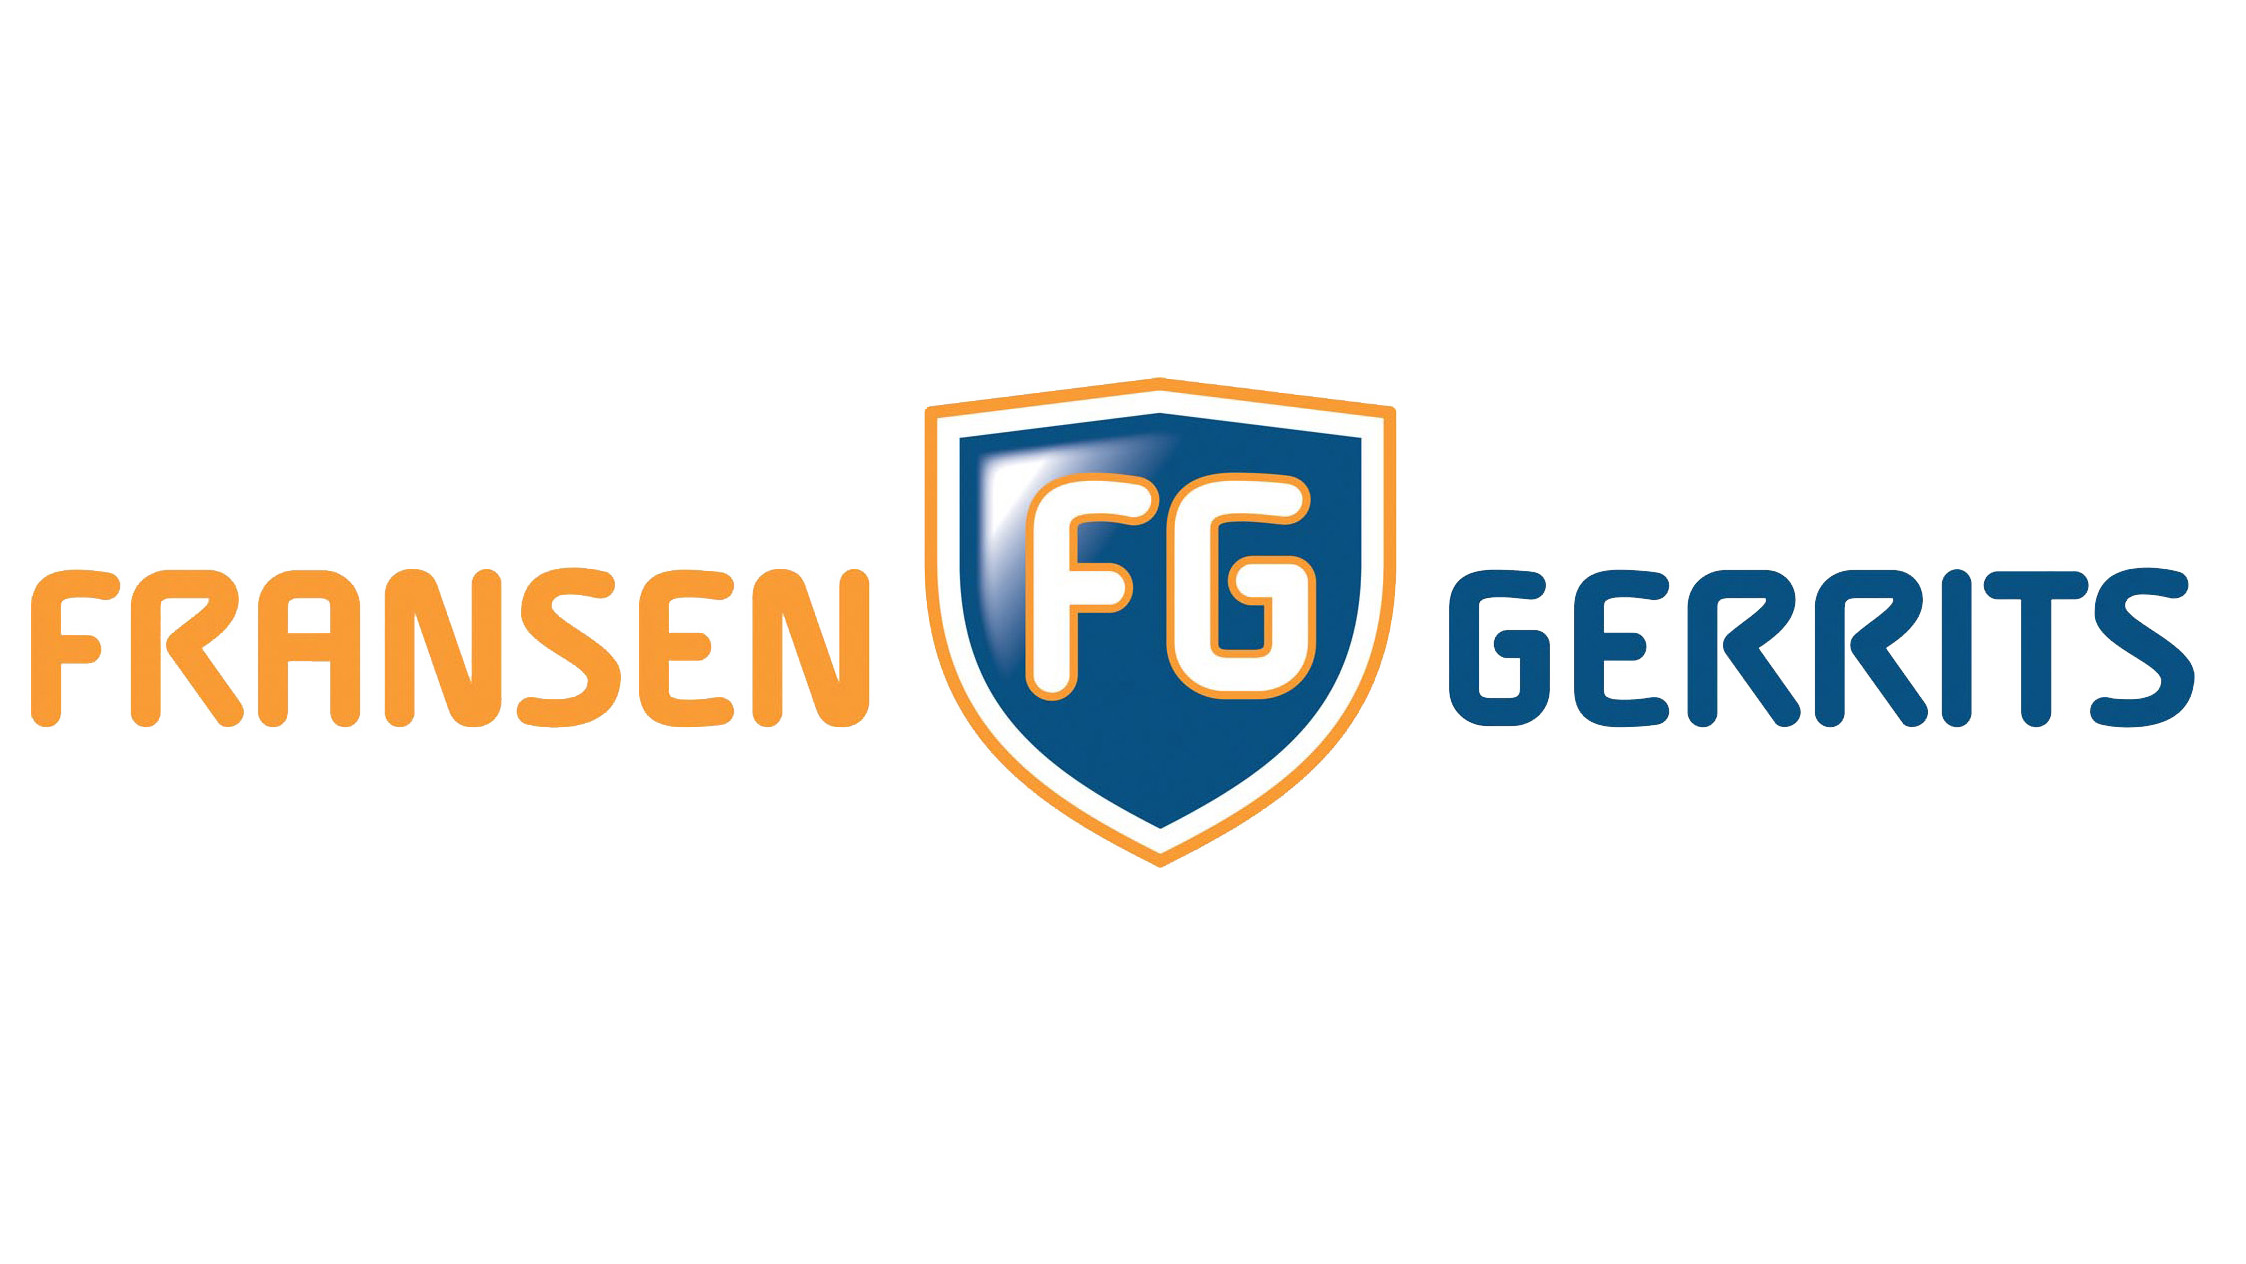 7 Fransen Gerrits Logo FG 2164x491 gew